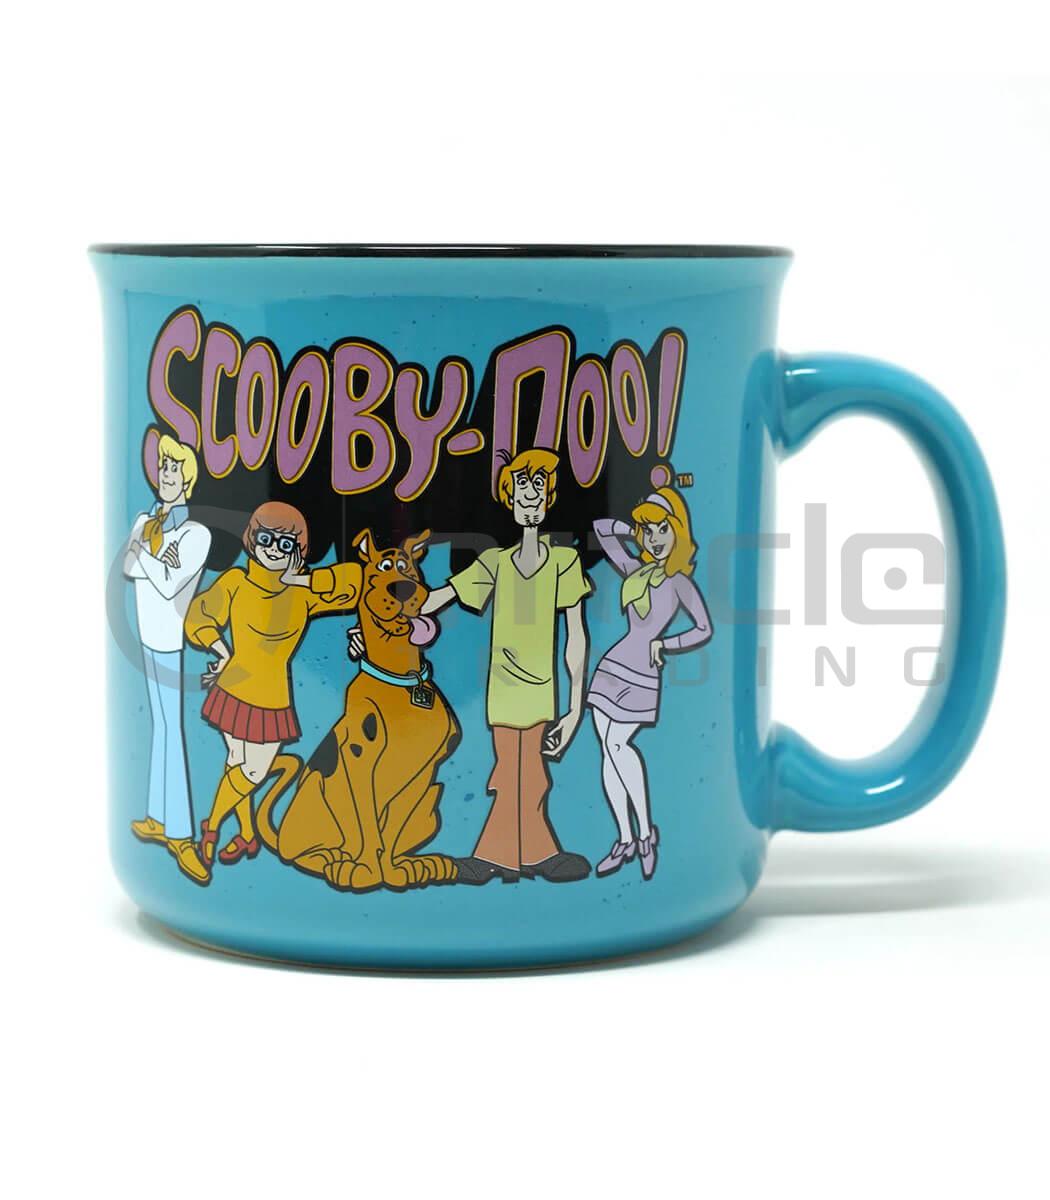 Scooby Doo Jumbo Camper Mug - Group Shot